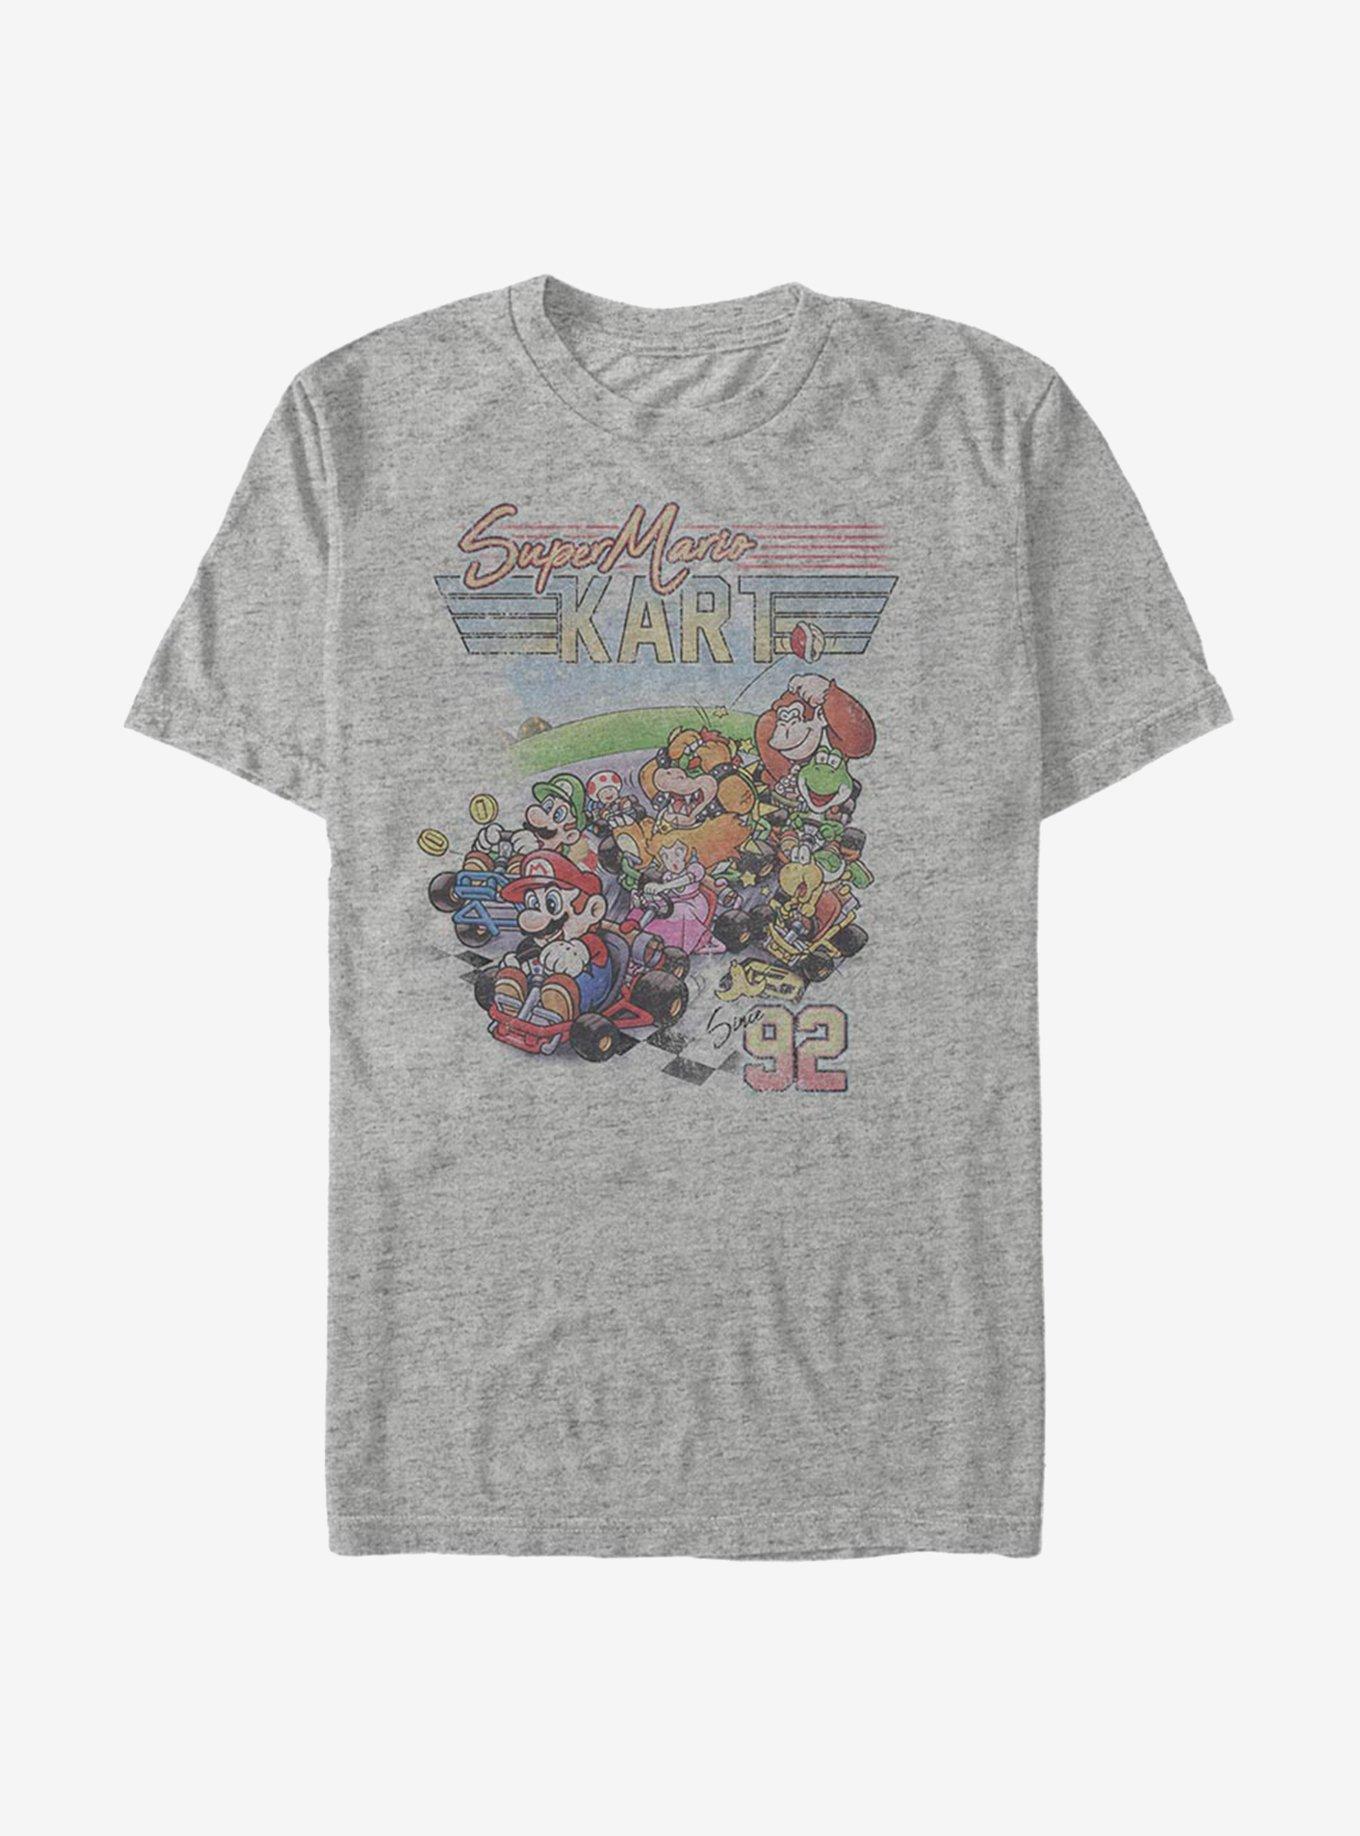 Super Mario Kart Nineties T-Shirt